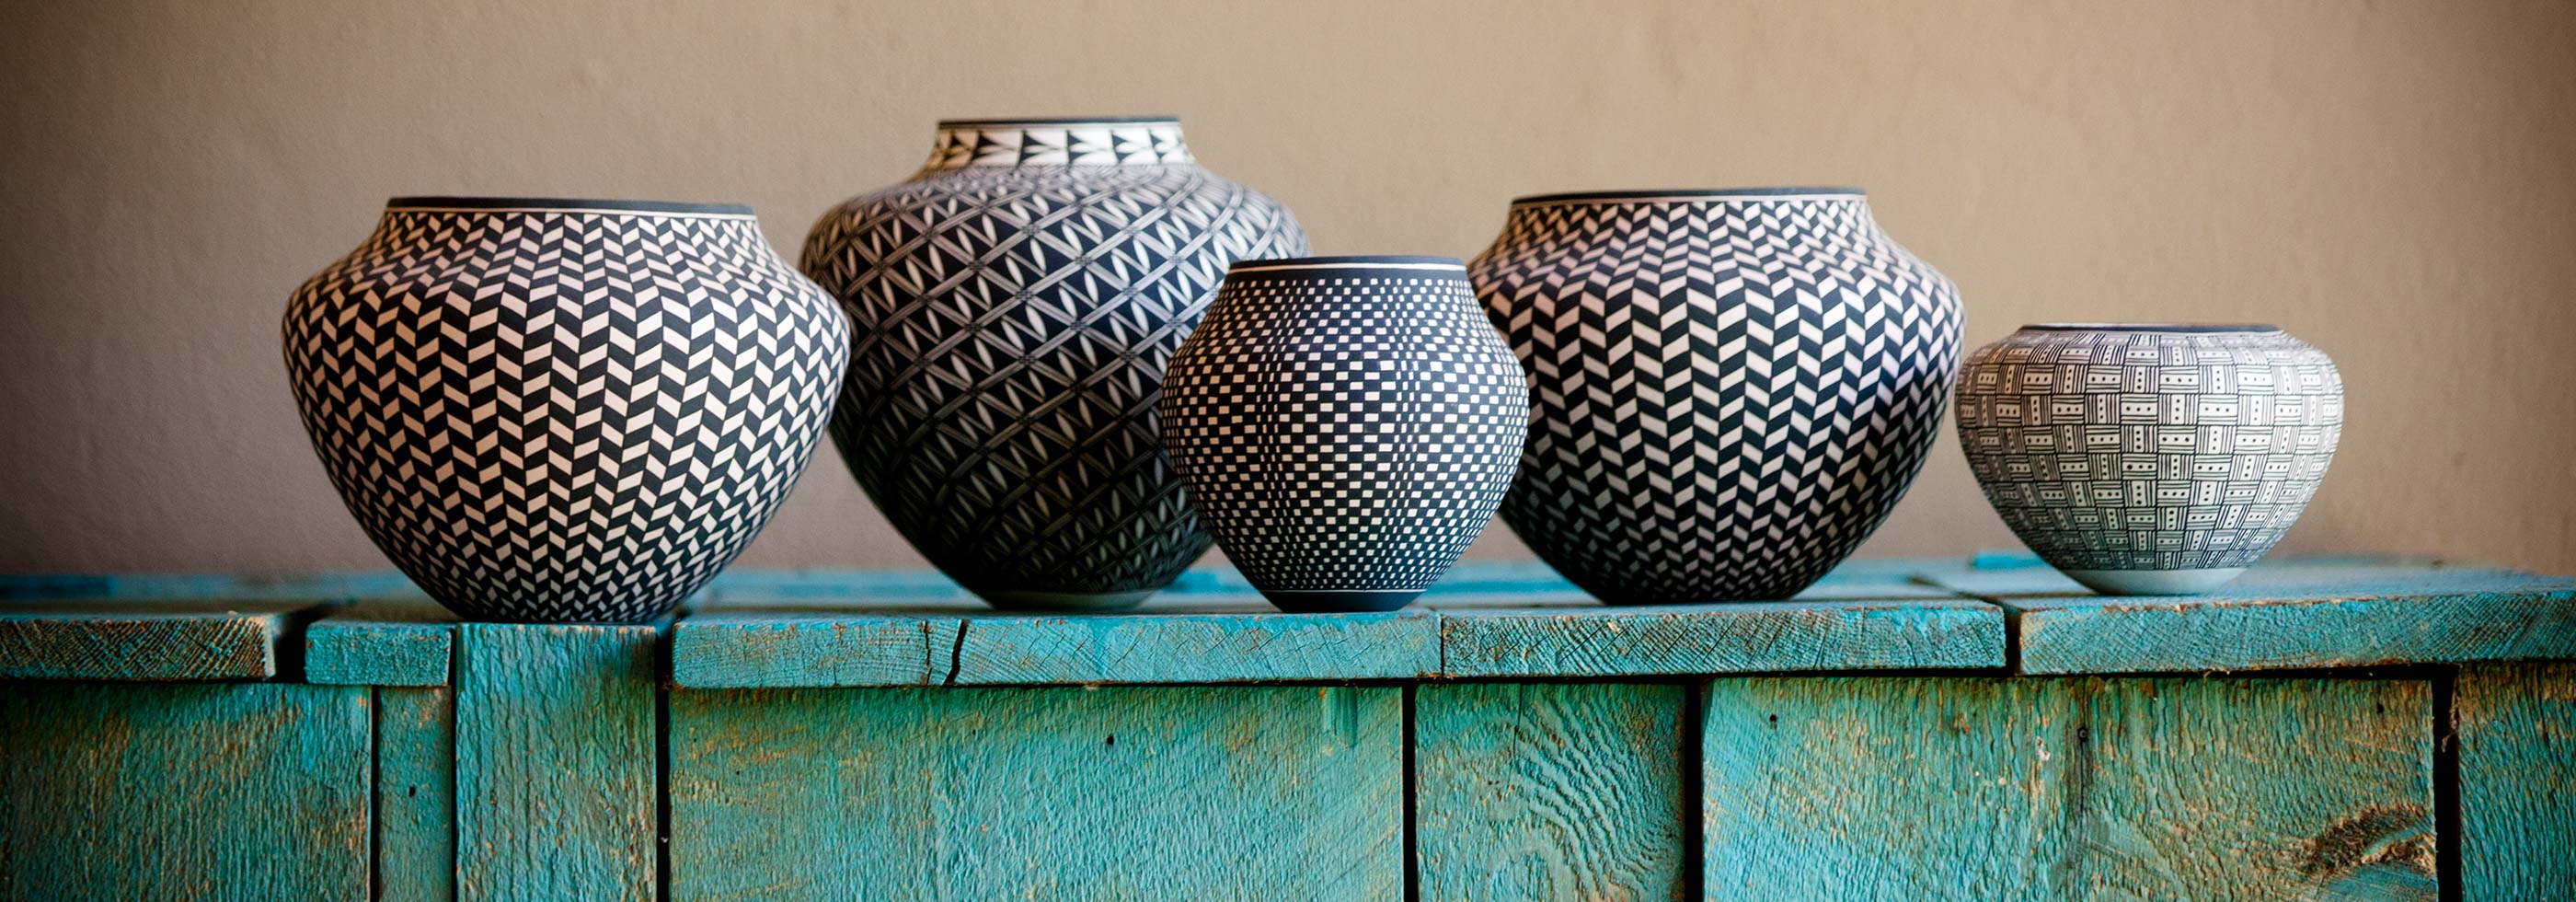 _MG_9204_pottery2